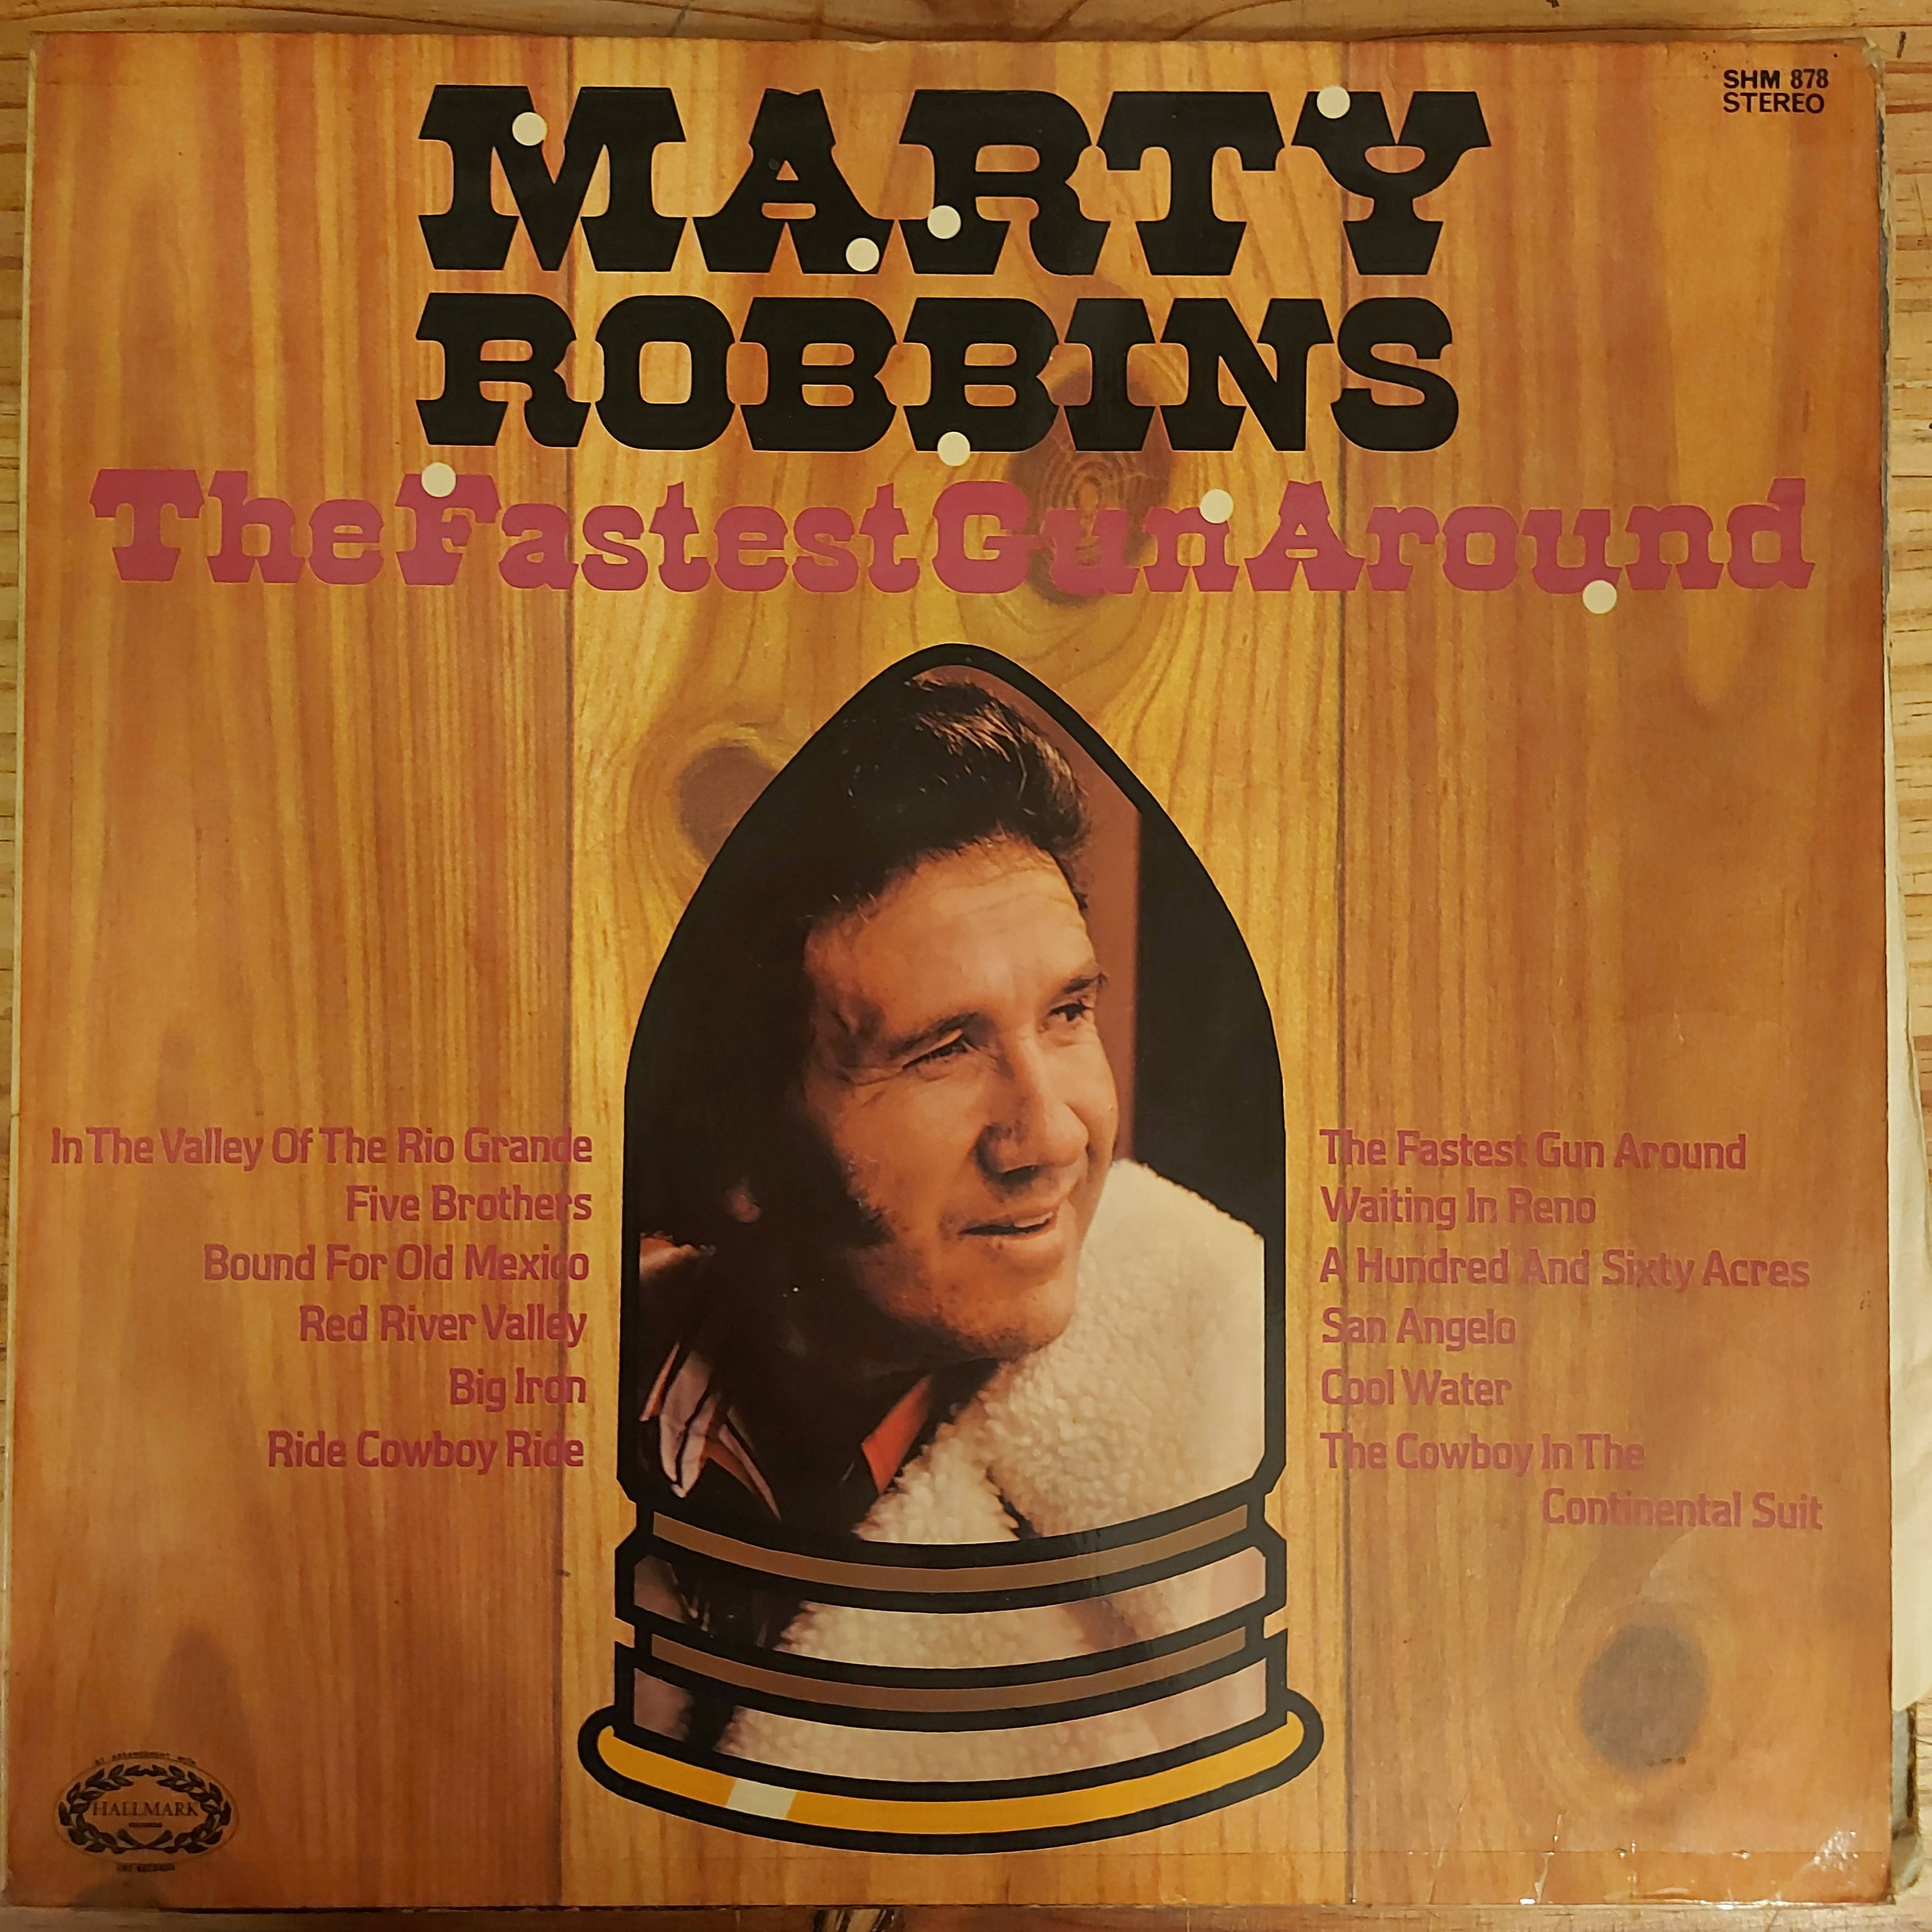 Marty Robbins – The Fastest Gun Around (Used Vinyl - G)